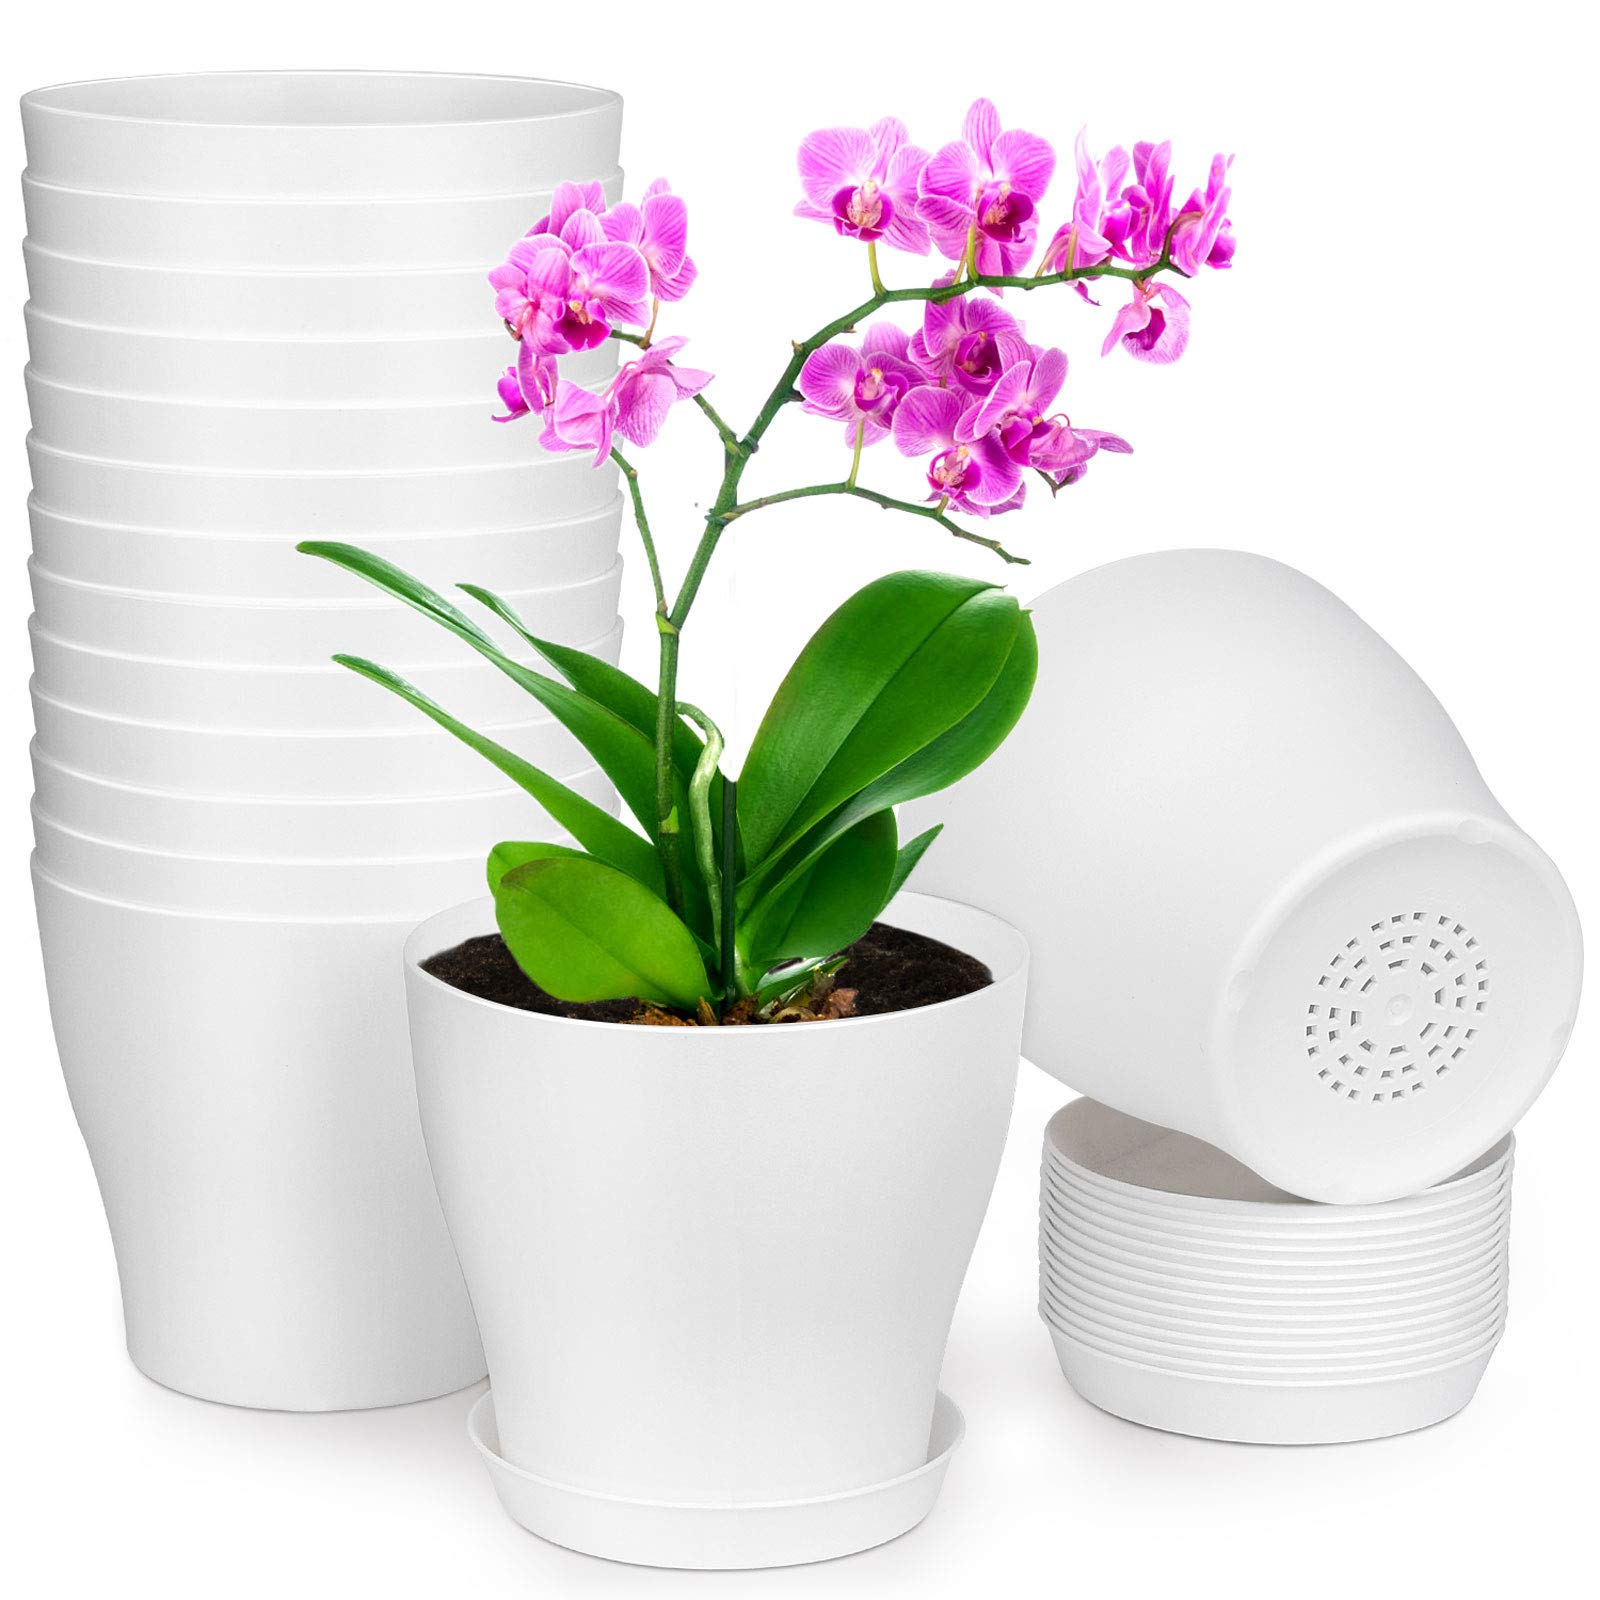 Plant Pots Plastic Planters Multiple Drainage Holes and Tray Home Garden Flower Decor